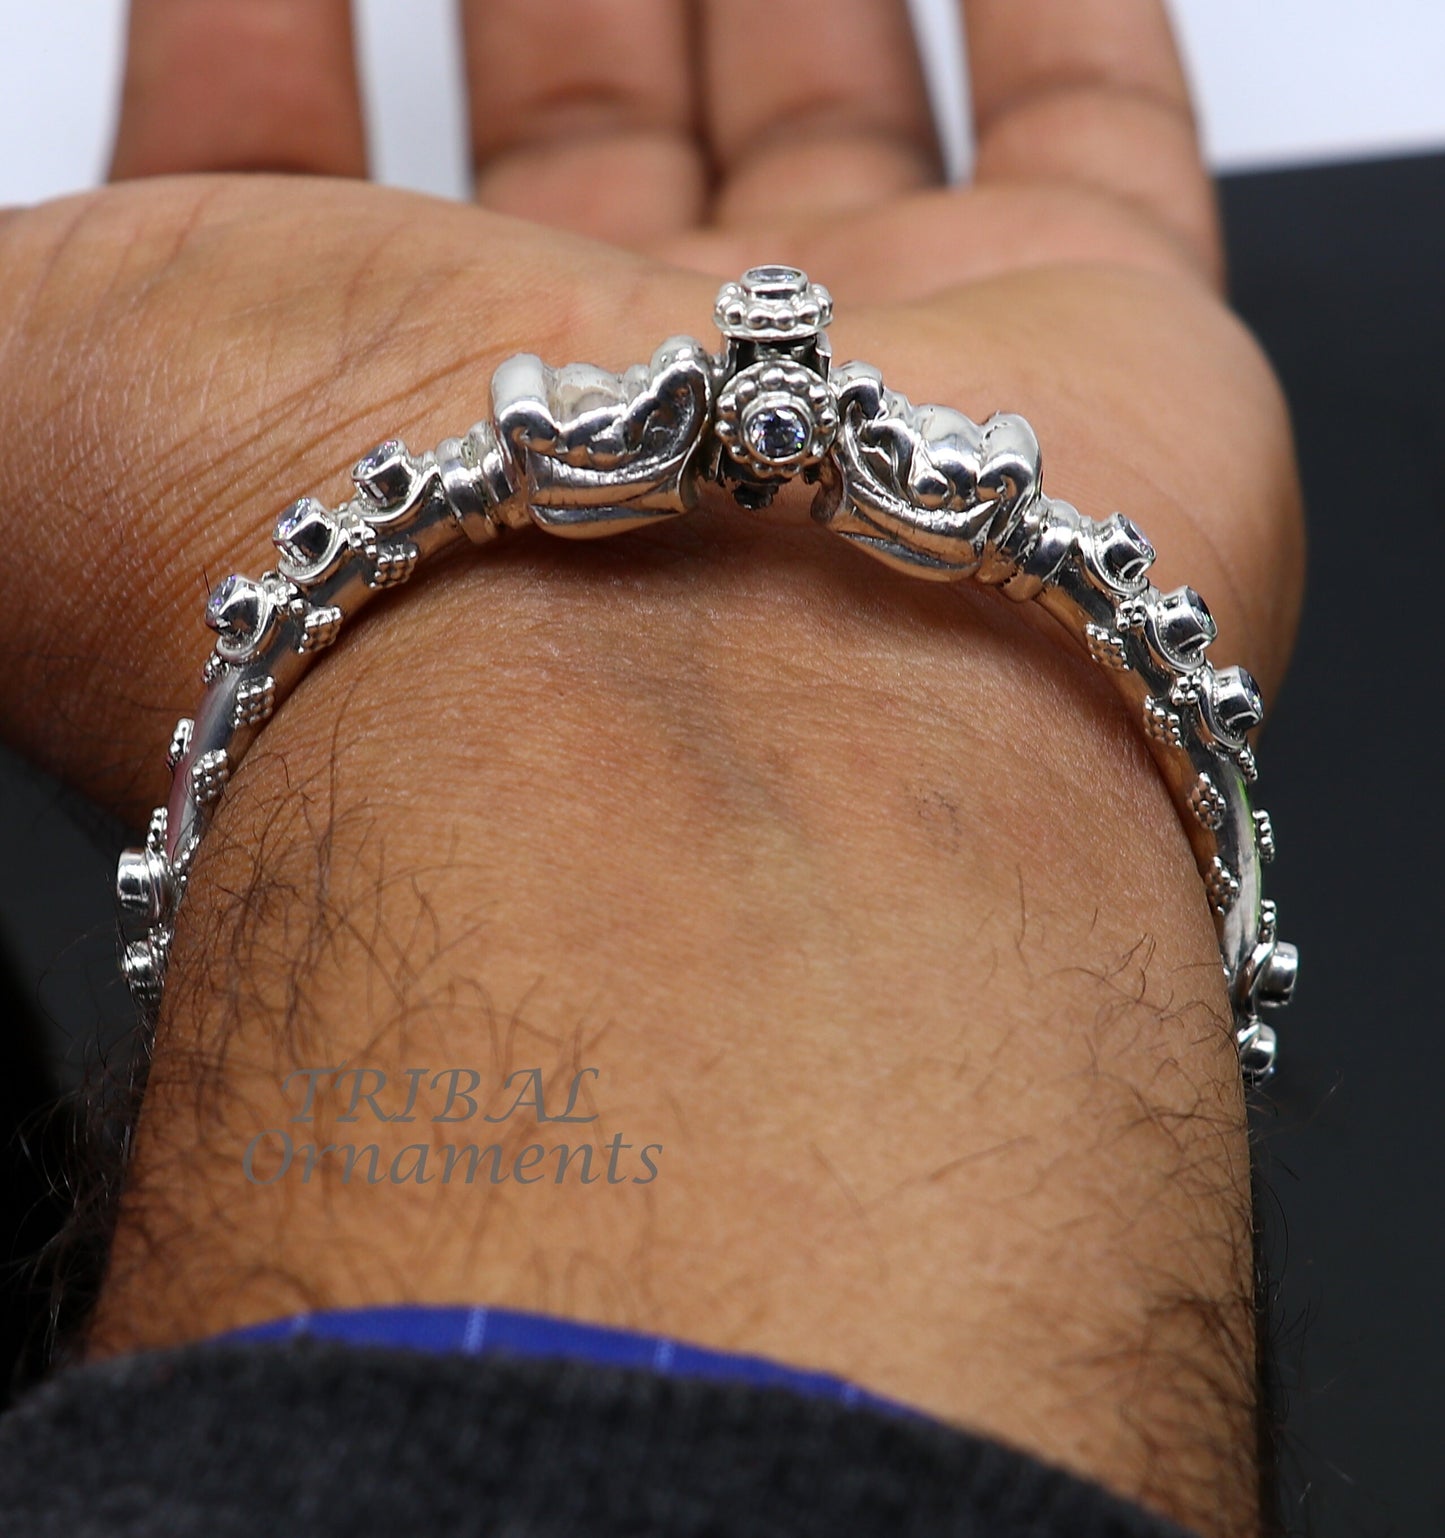 Vintage plain shiny design handmade 925 sterling silver amazing Elephant face bangle bracelet kada unisex customized wrist jewelry nsk625 - TRIBAL ORNAMENTS